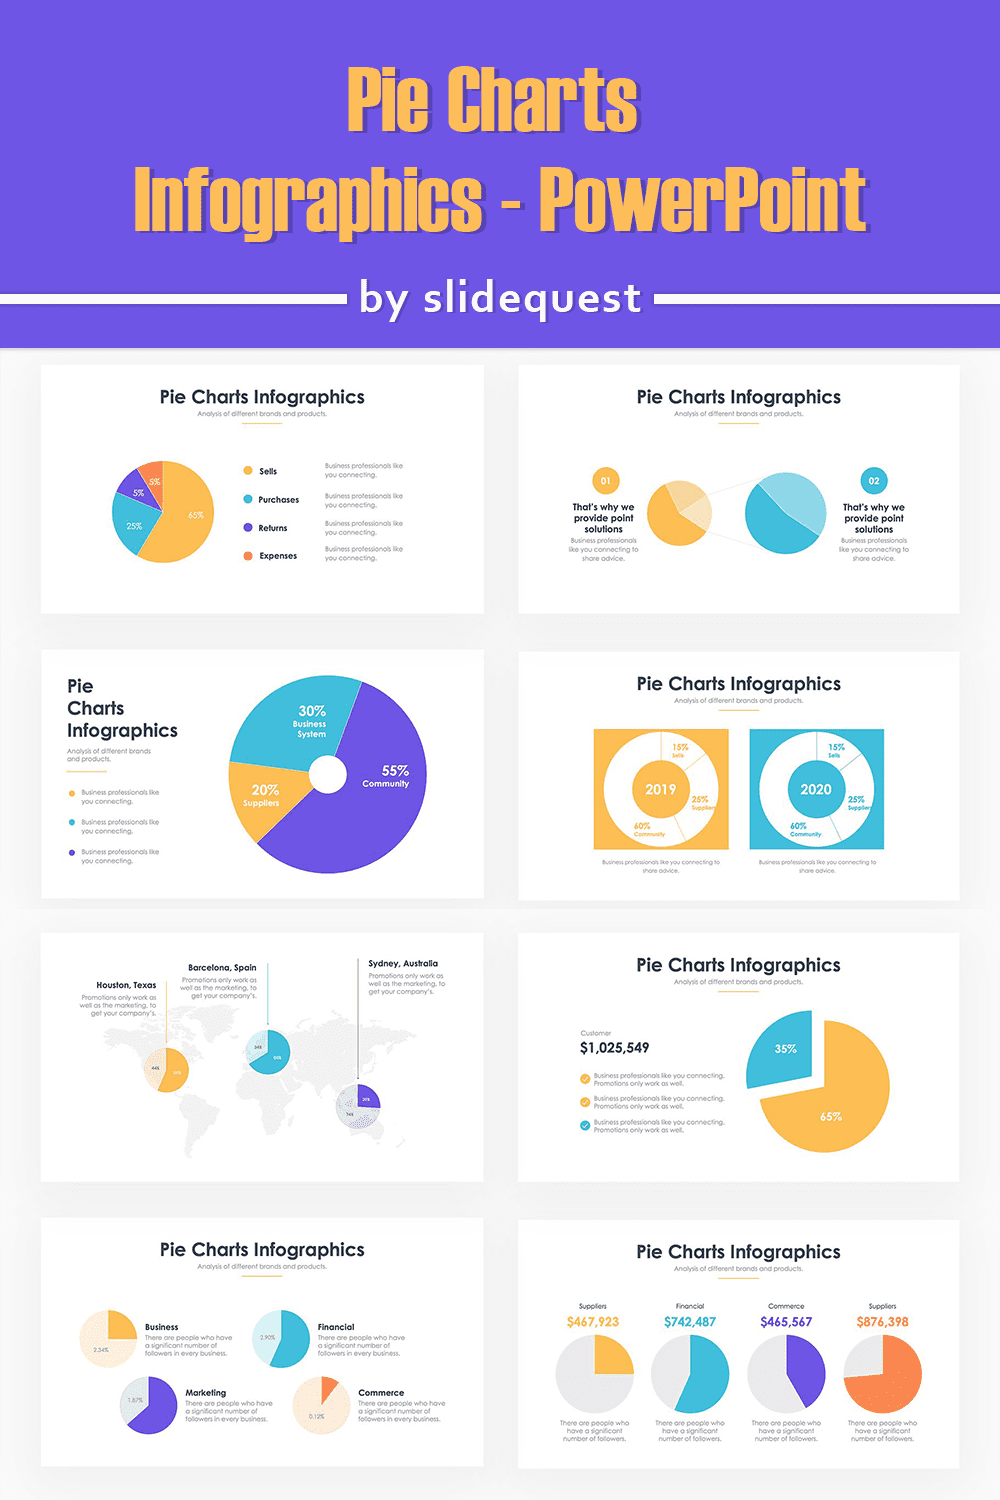 Pie Charts Infographics - PowerPoint pinterest image.